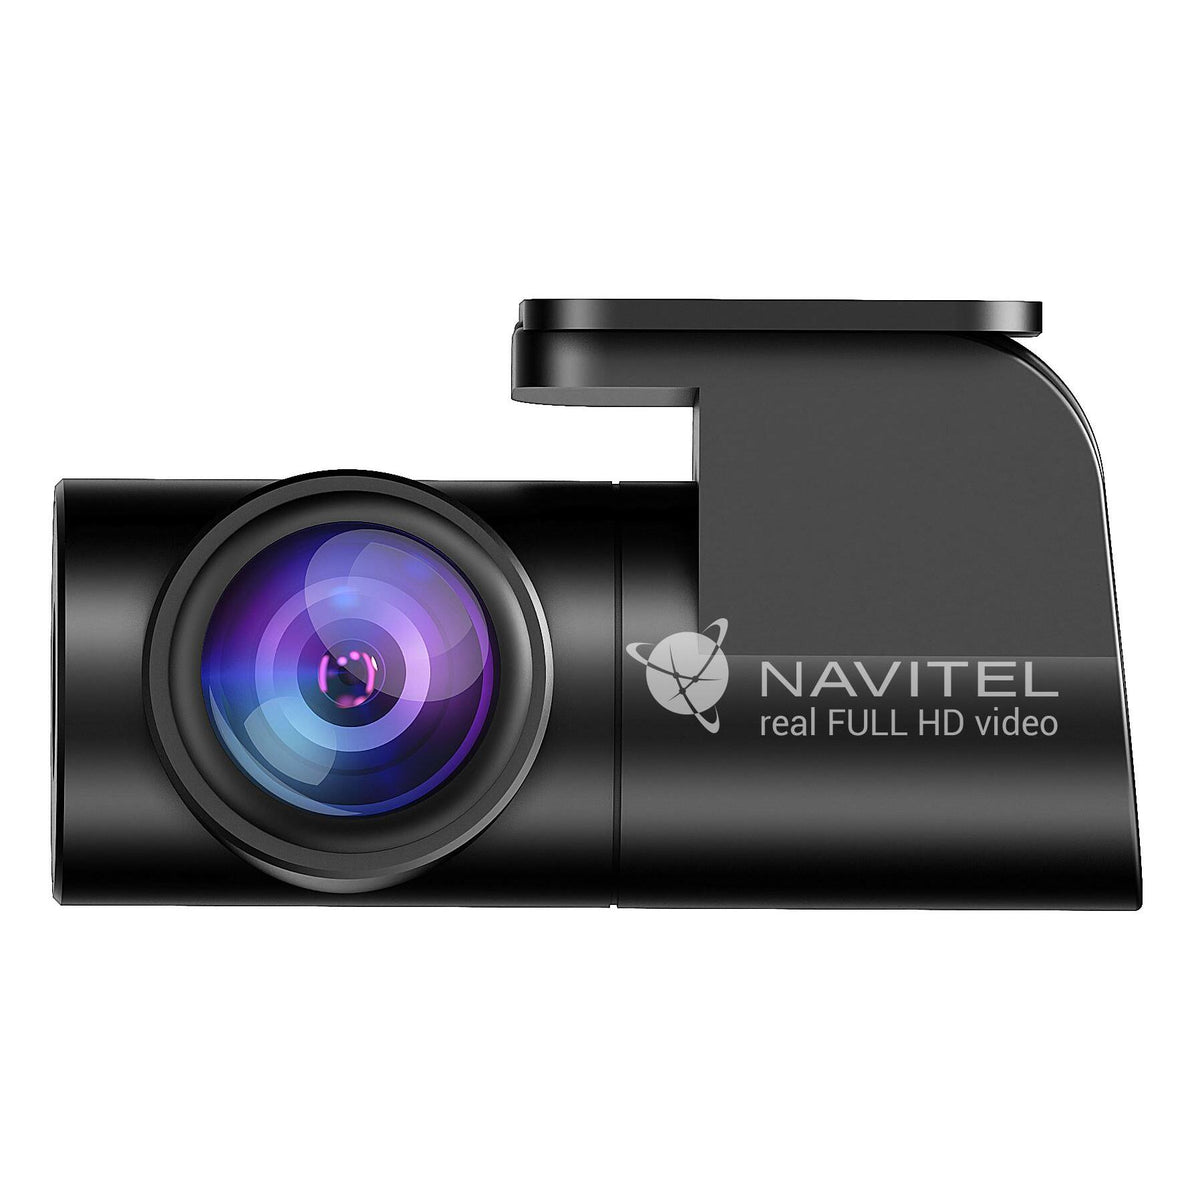 Duální kamera do auta Navitel R9 DUAL, GPS, WiFi, 2,7&quot;, 170°